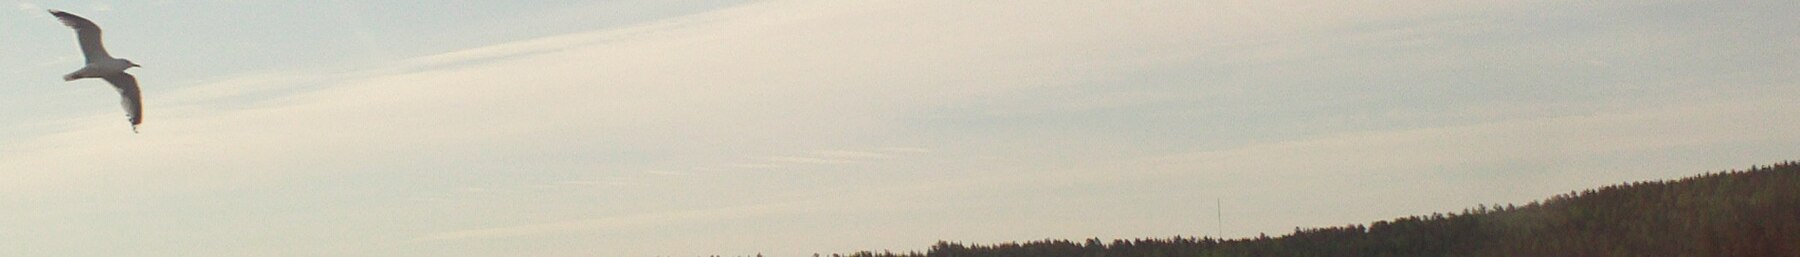 Banner van Sentraal -Finland Flying bird.jpg